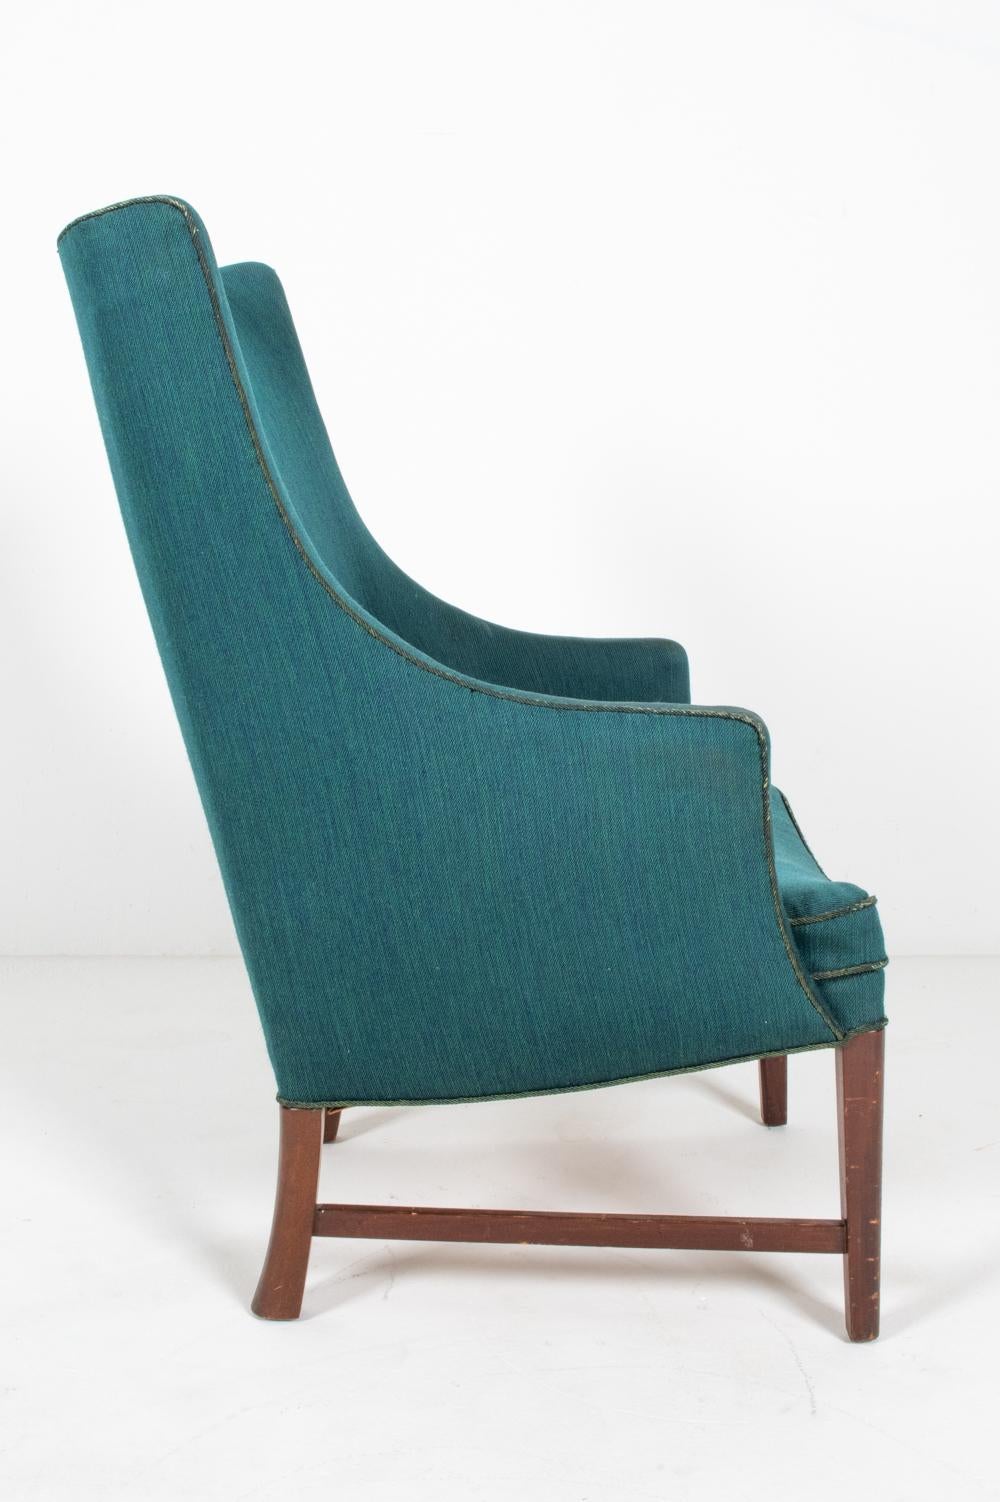 Frits Henningsen Danish Highback Lounge Chair, c. 1940's For Sale 10